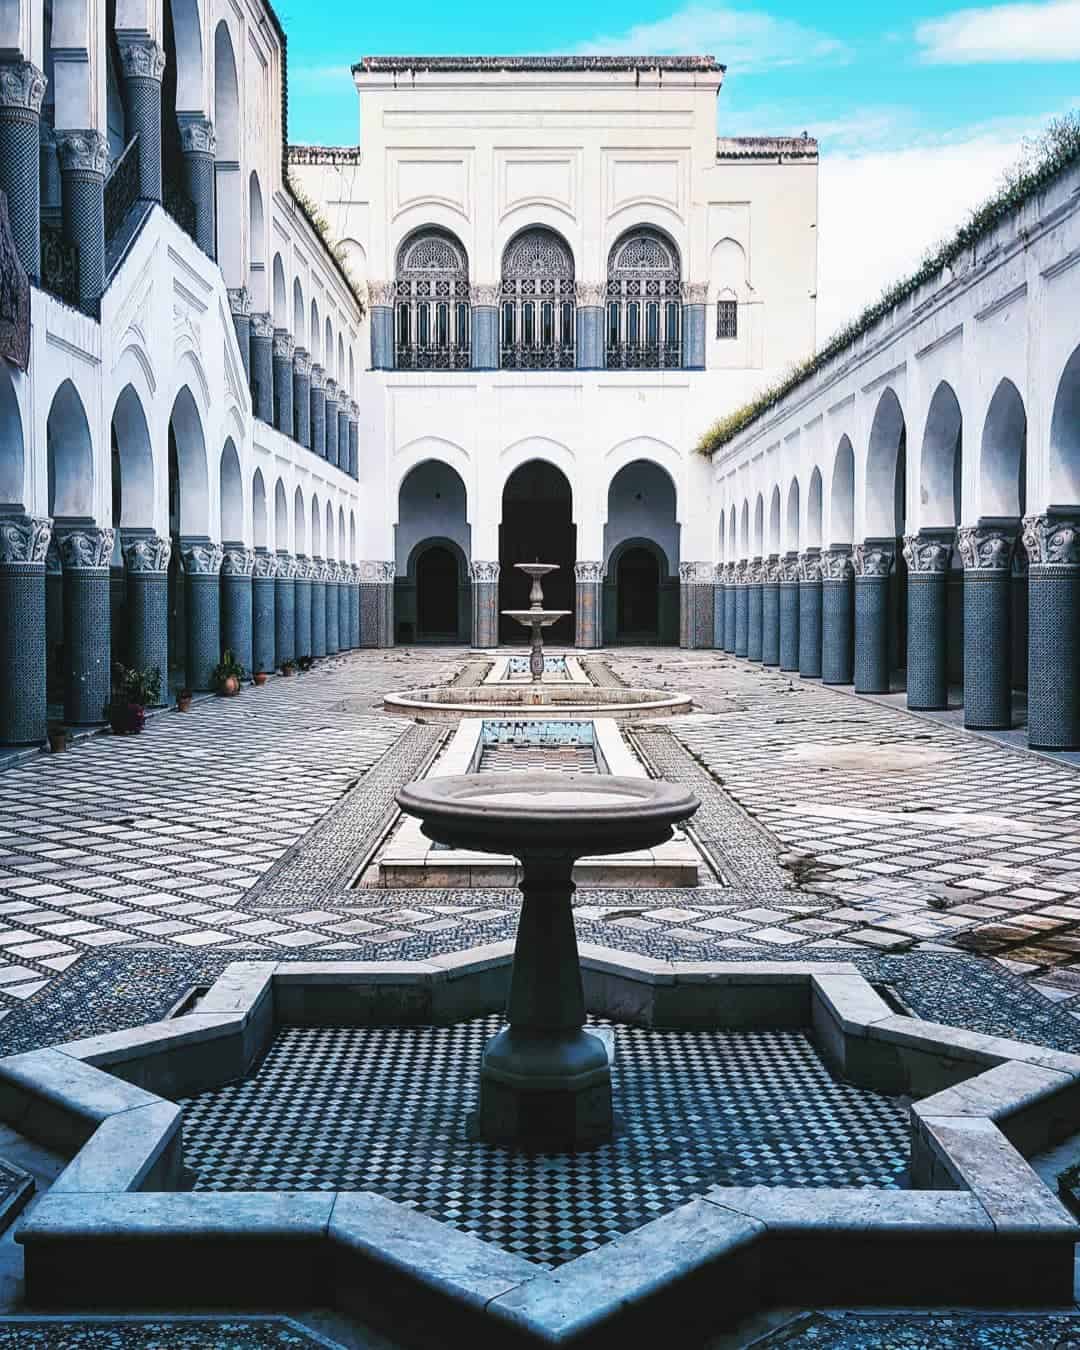 El Mokri Palace in Fez, Morocco